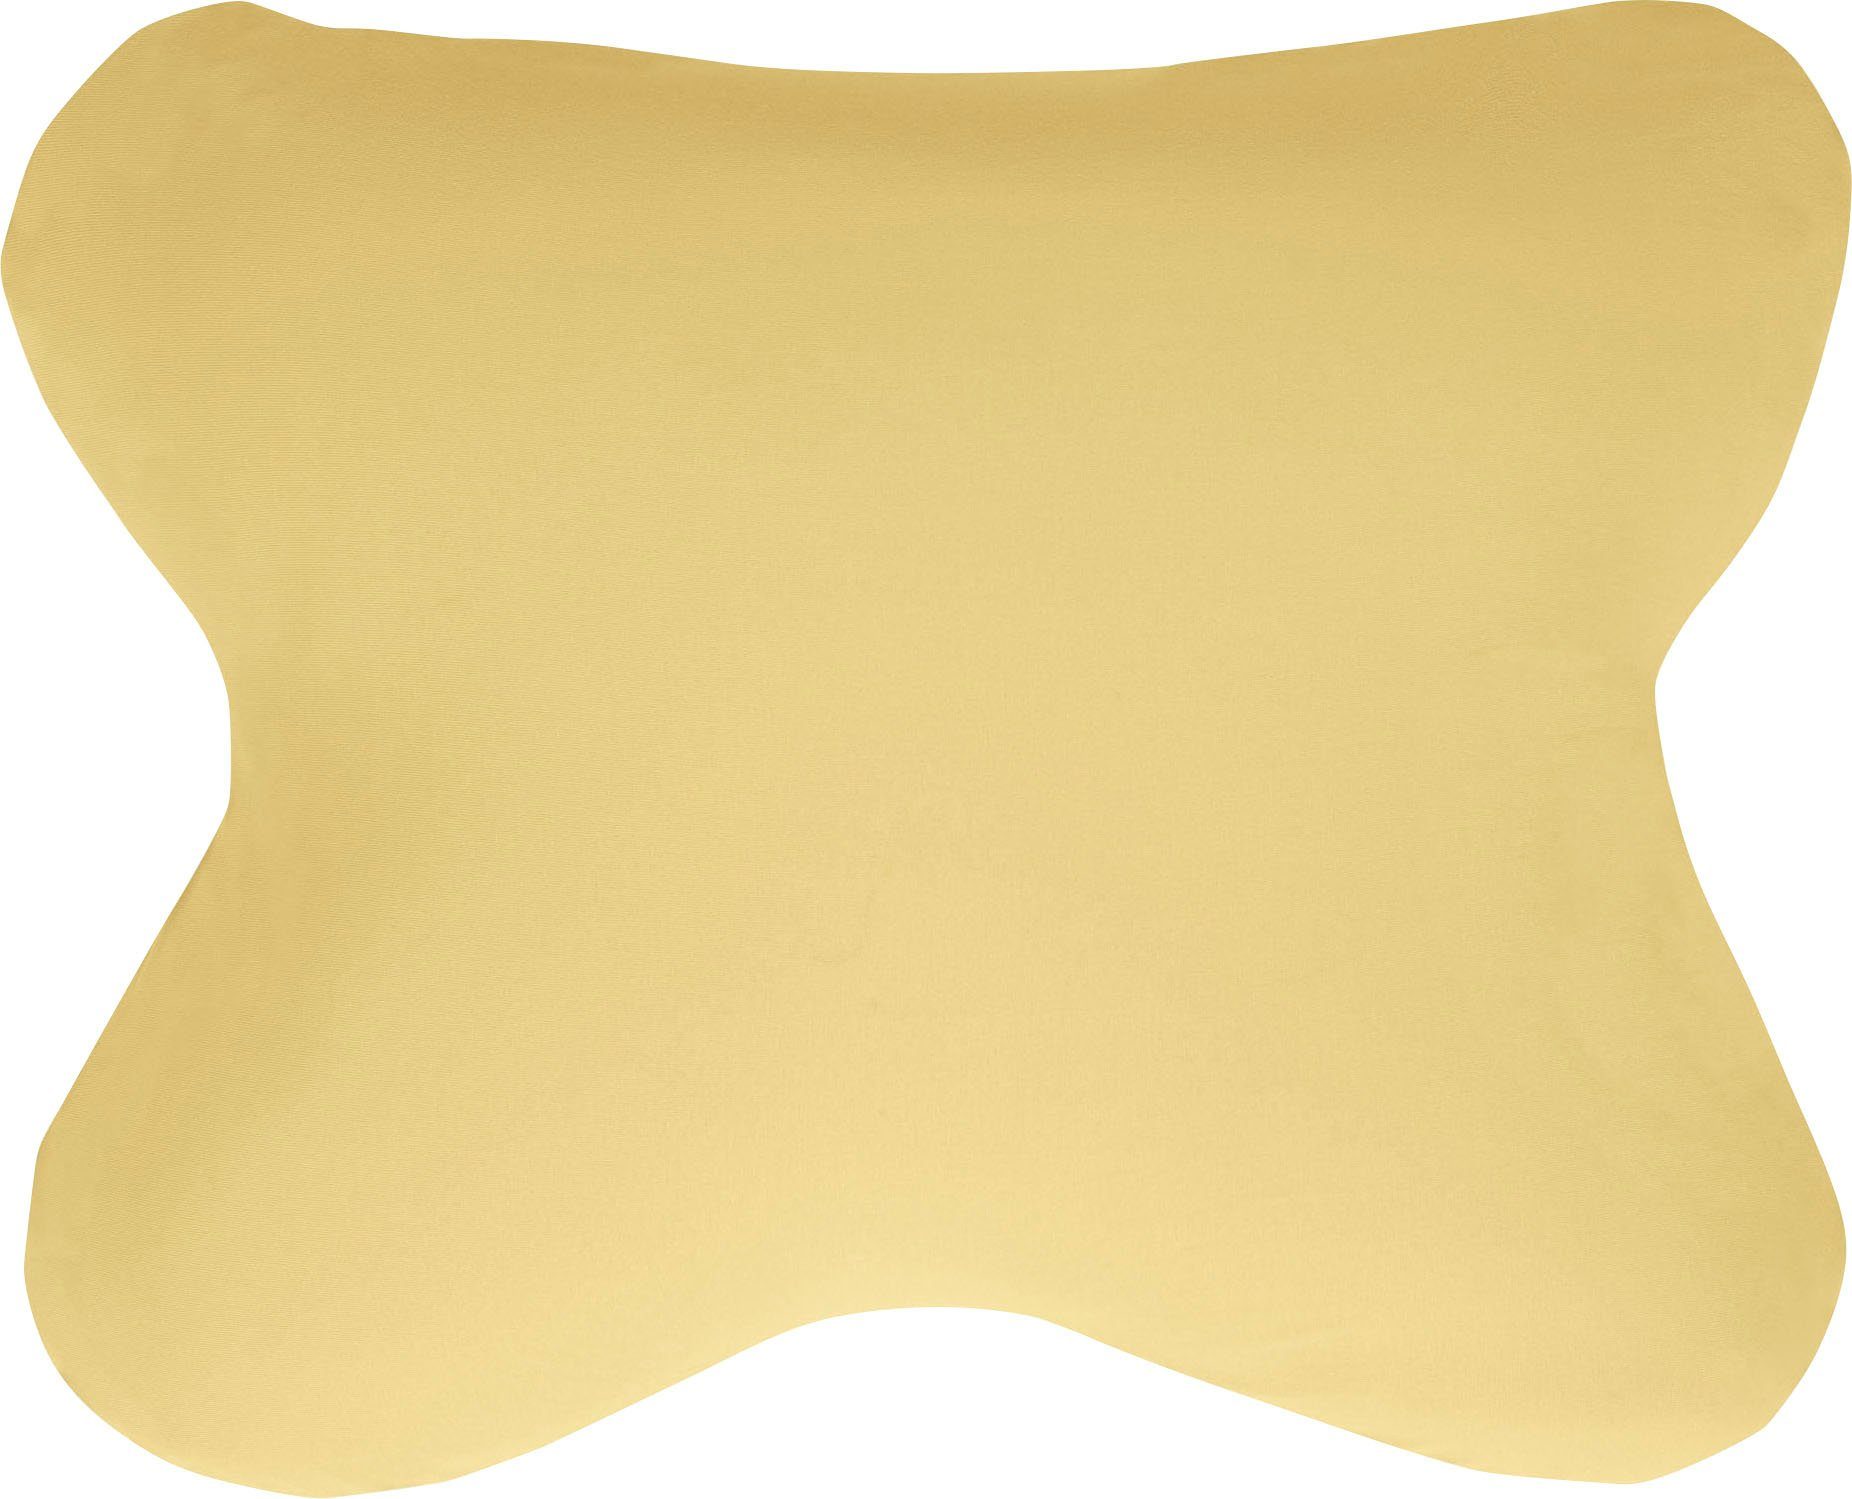 Kissenhülle für Kneer Stützkissen, Kissenbezug Reißverschluss Kissenbezug mit Ombracio Stück), Edel-Zwirn-Jersey, (1 flexible